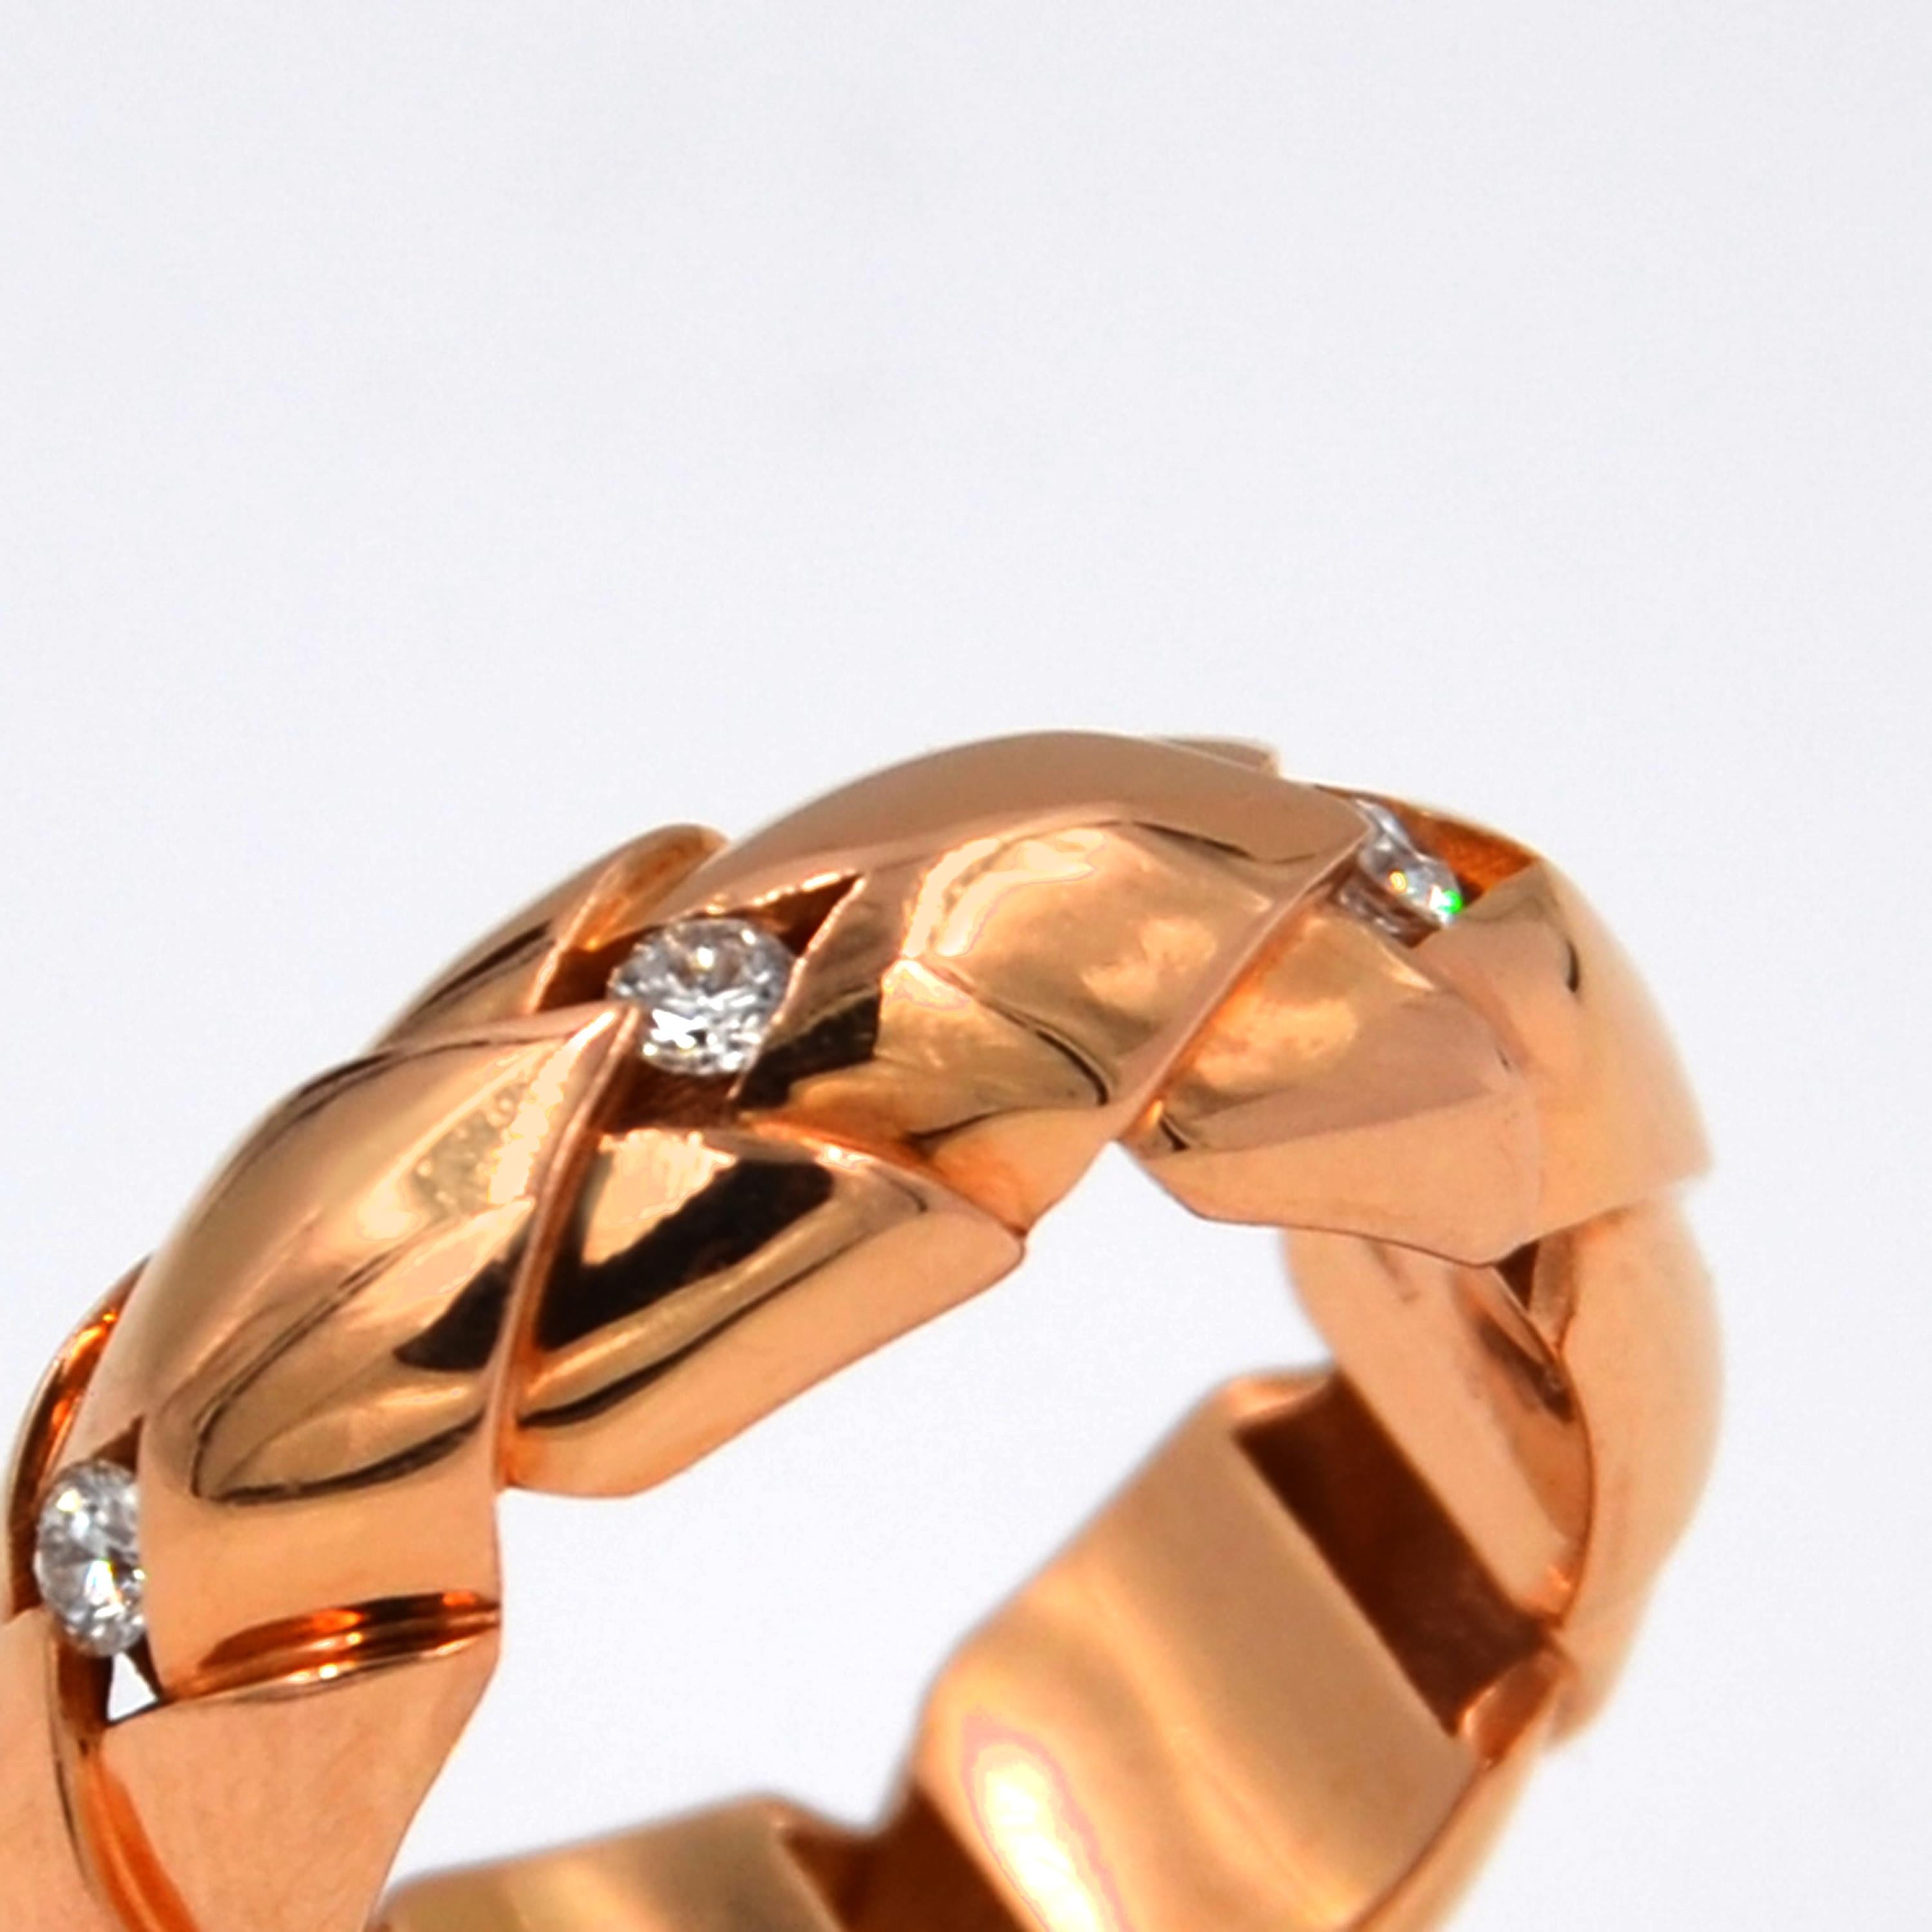 Contemporary 18 Karat Rose Gold Diamond Garavelli Ring